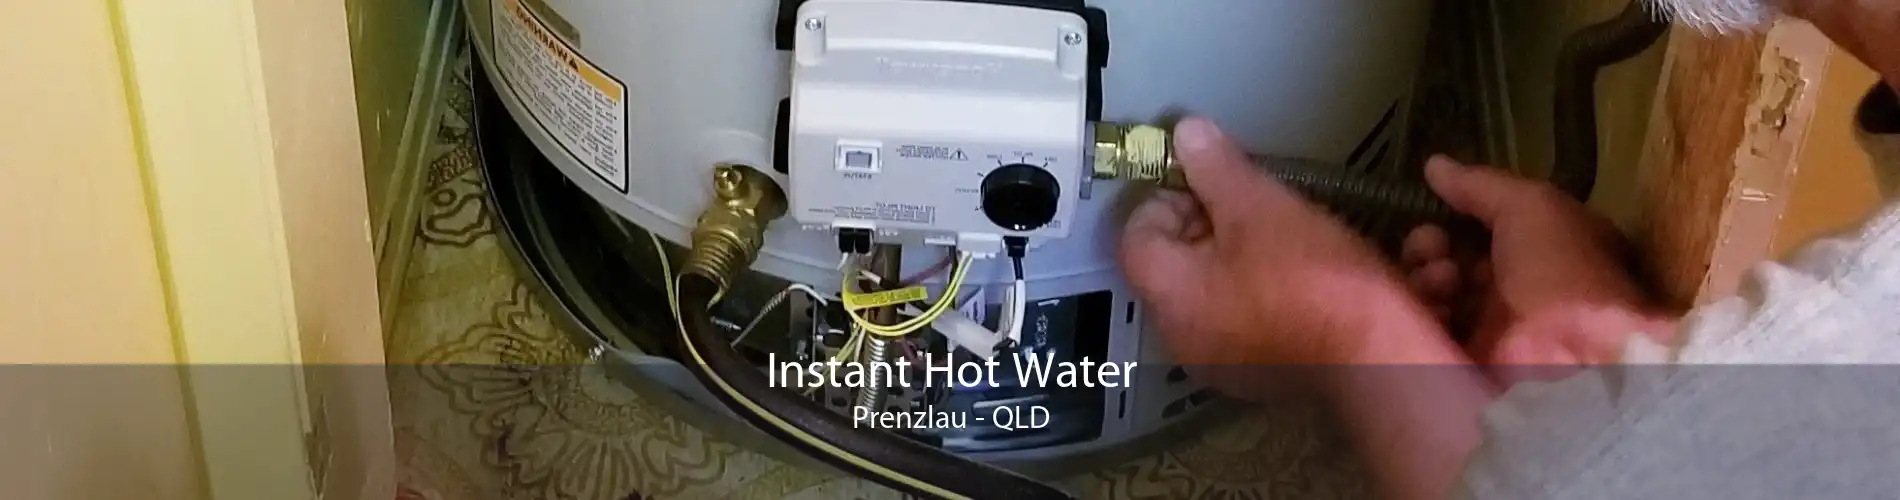 Instant Hot Water Prenzlau - QLD